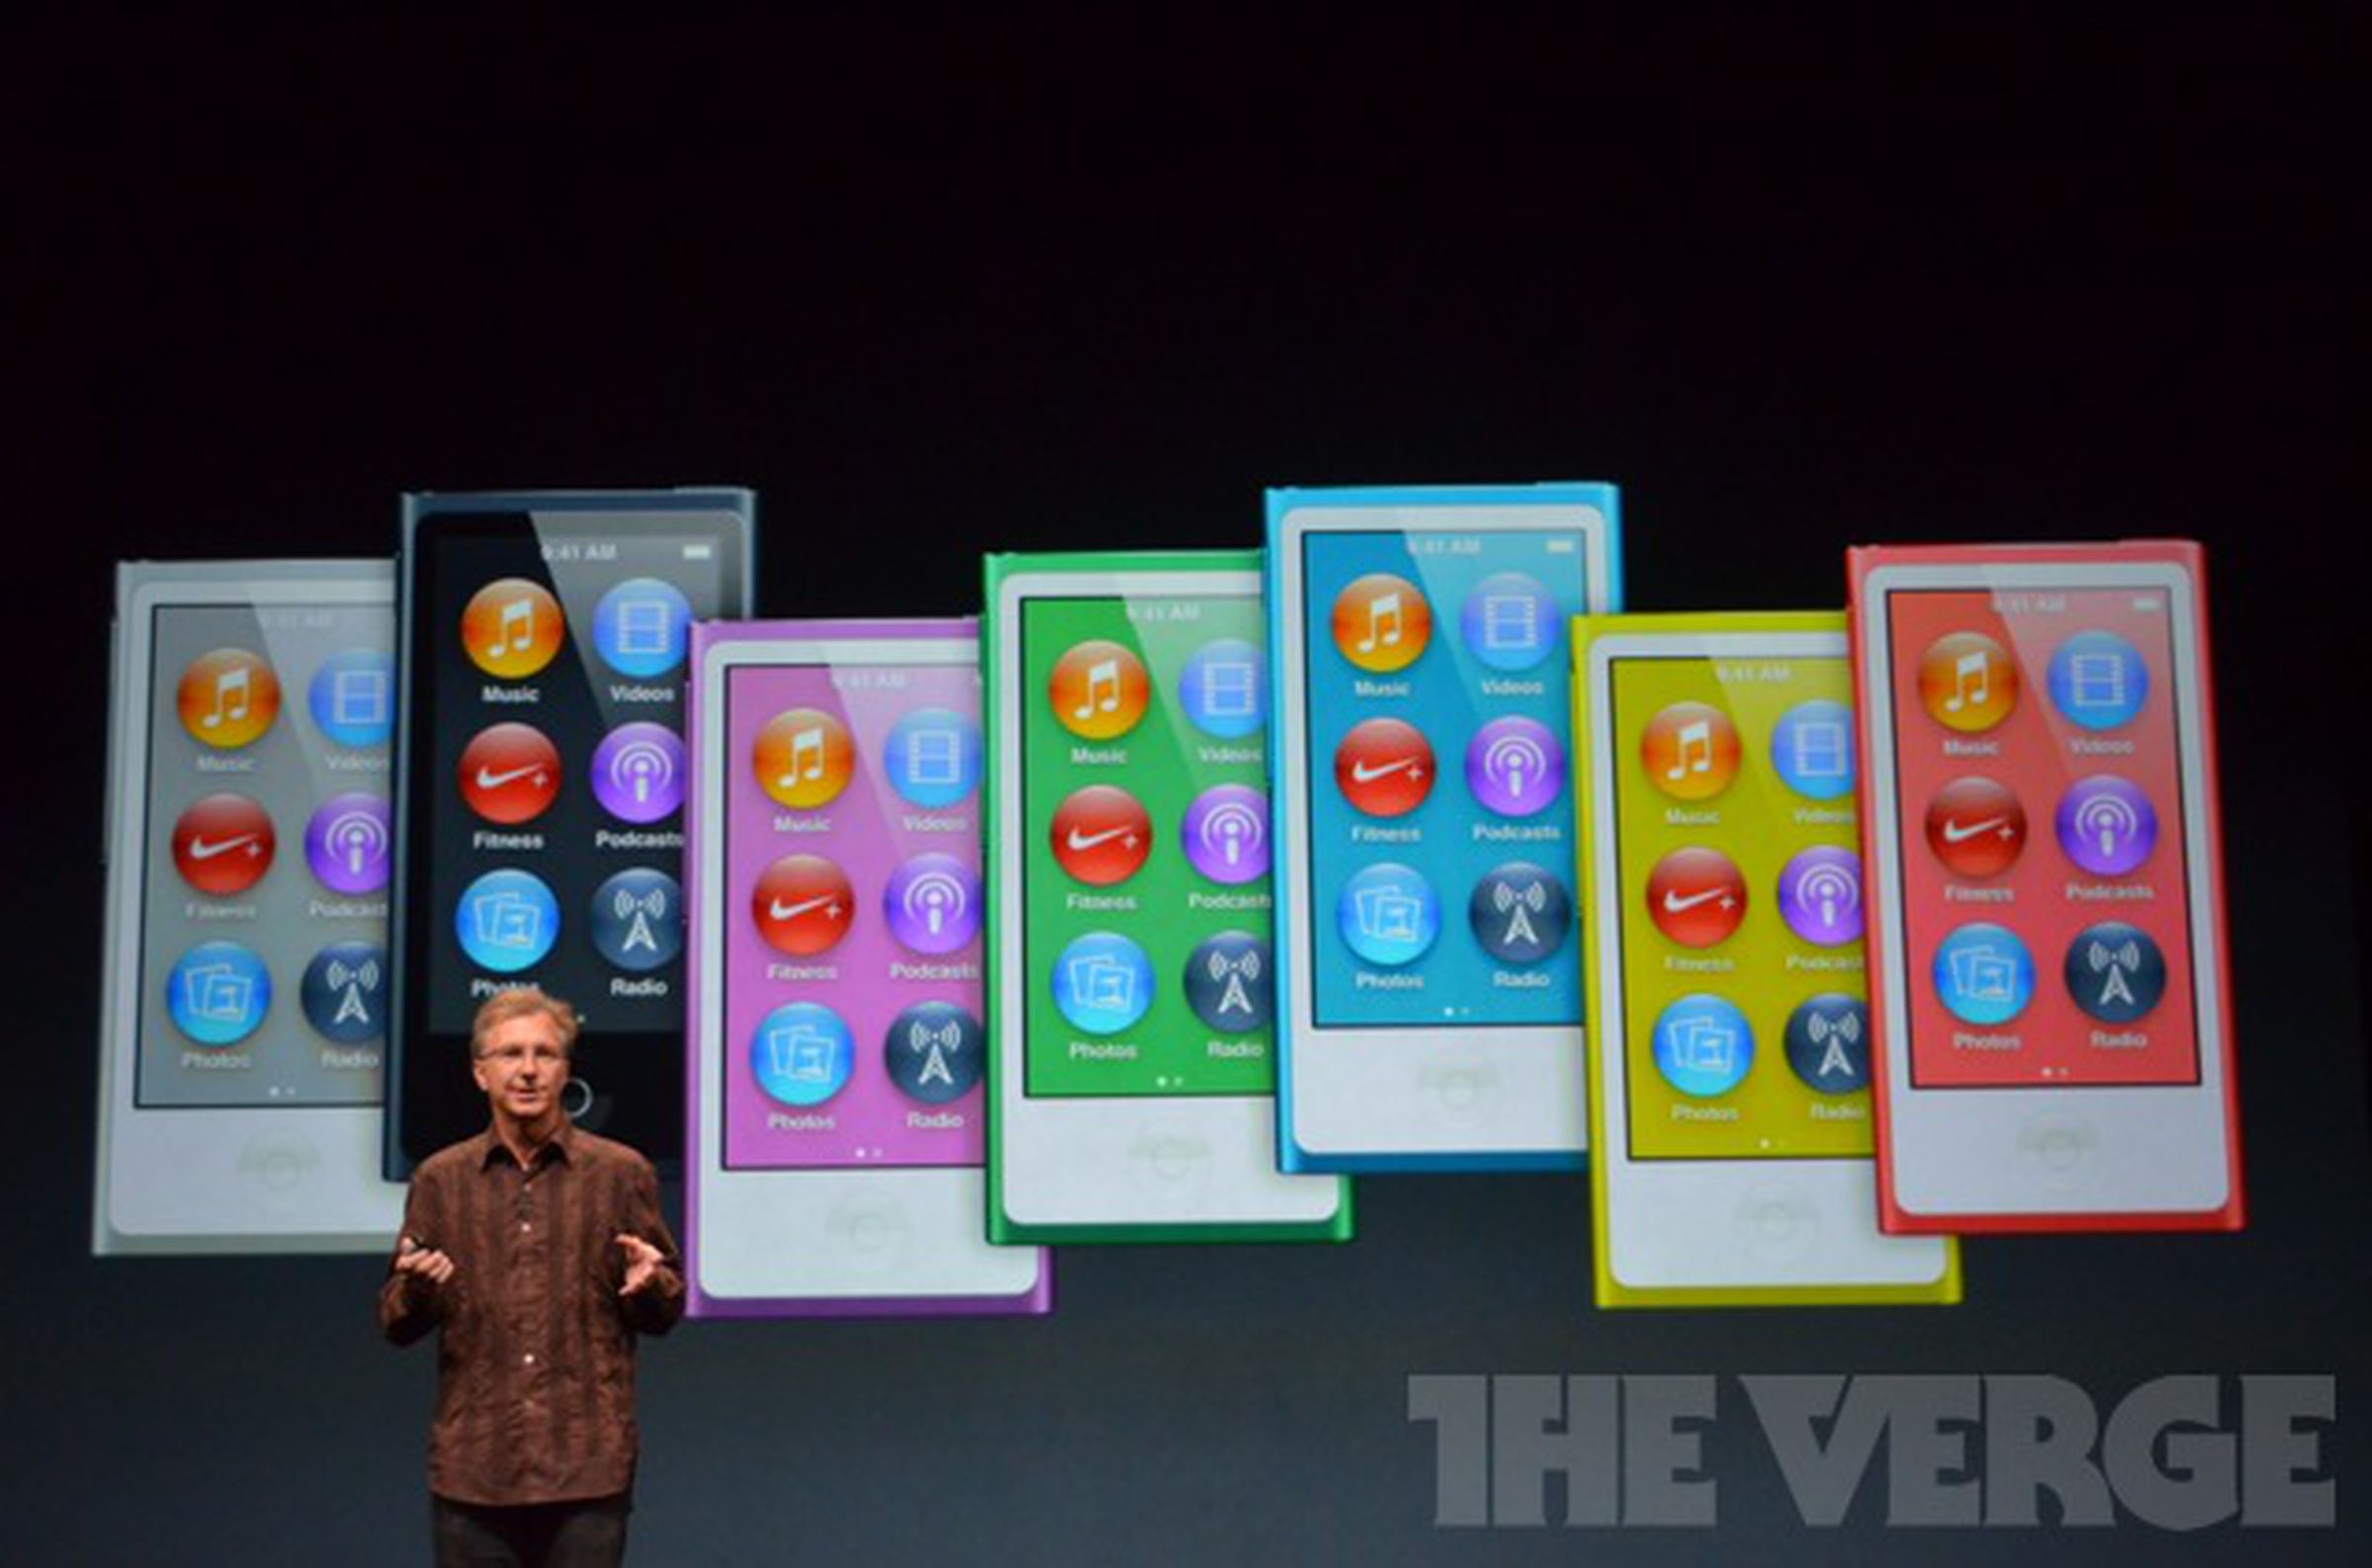 Liveblog images of Apple's new iPod Nano